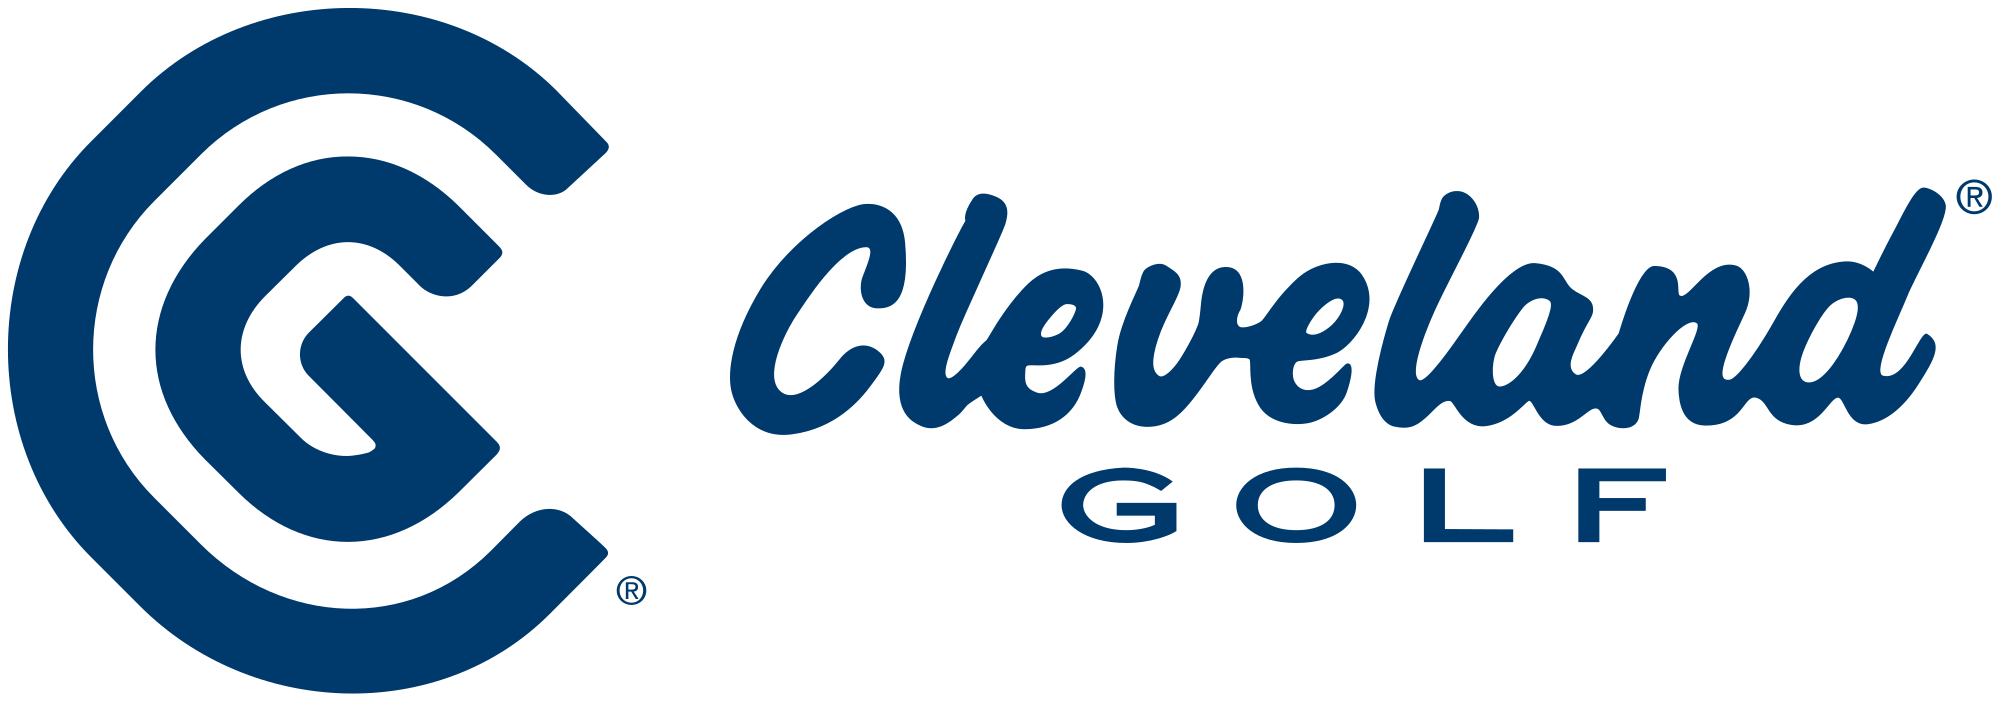 Blue Golf Logo - Cleveland Golf Logo.svg